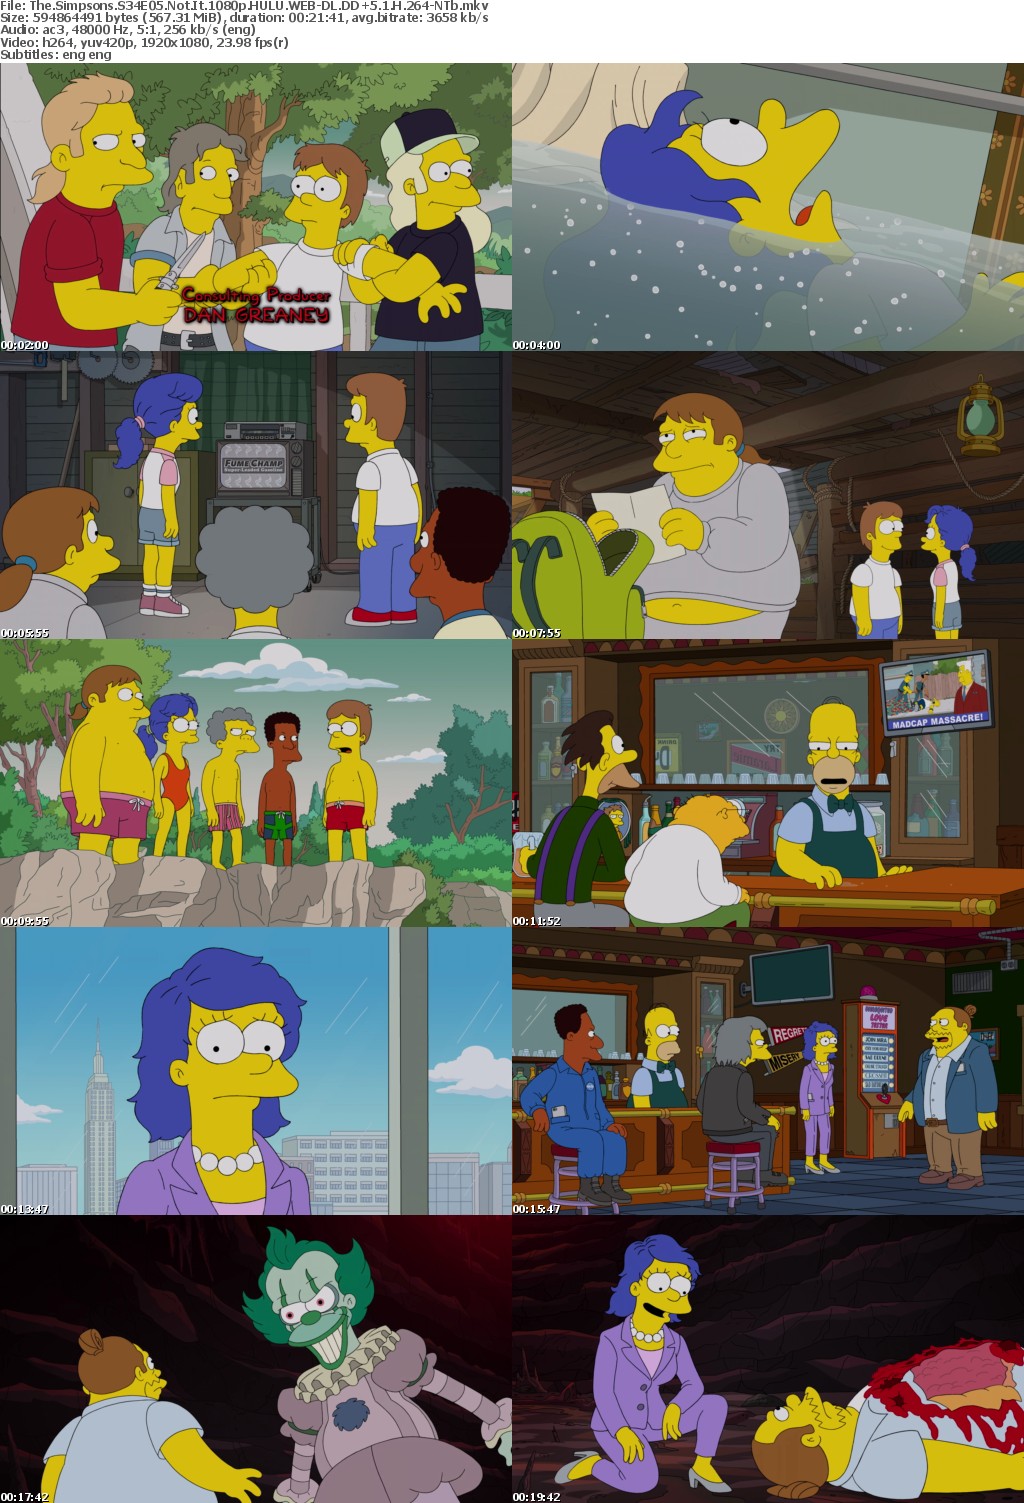 The Simpsons S34E05 Not It 1080p HULU WEBRip DDP5 1 x264-NTb